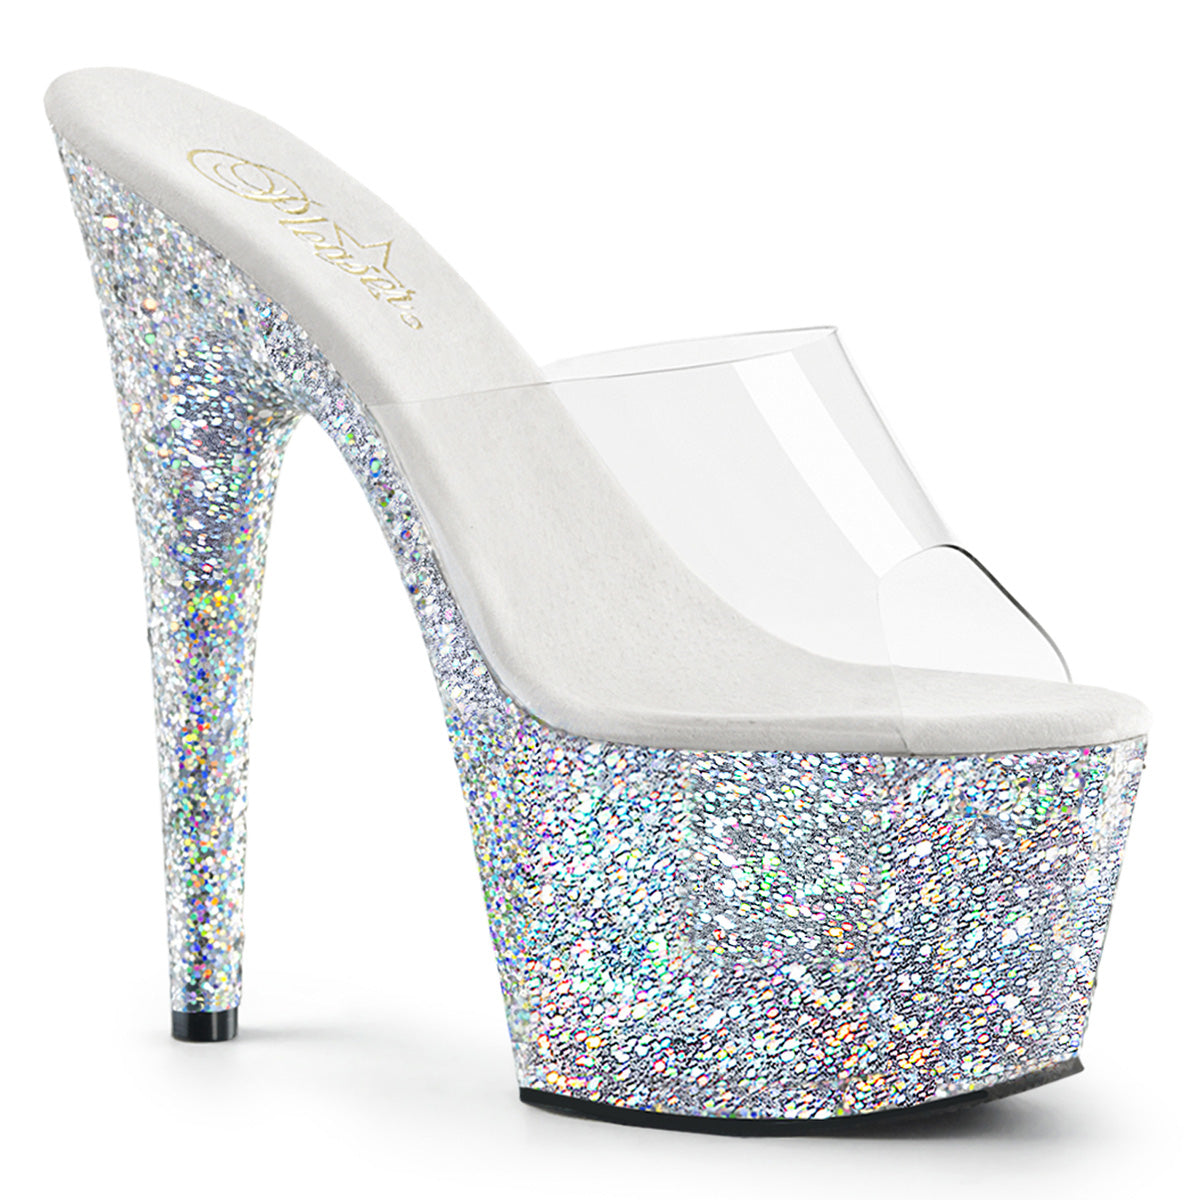 ADORE-701LG 7" Heel Clear Silver Glitter Platforms Sexy Shoe